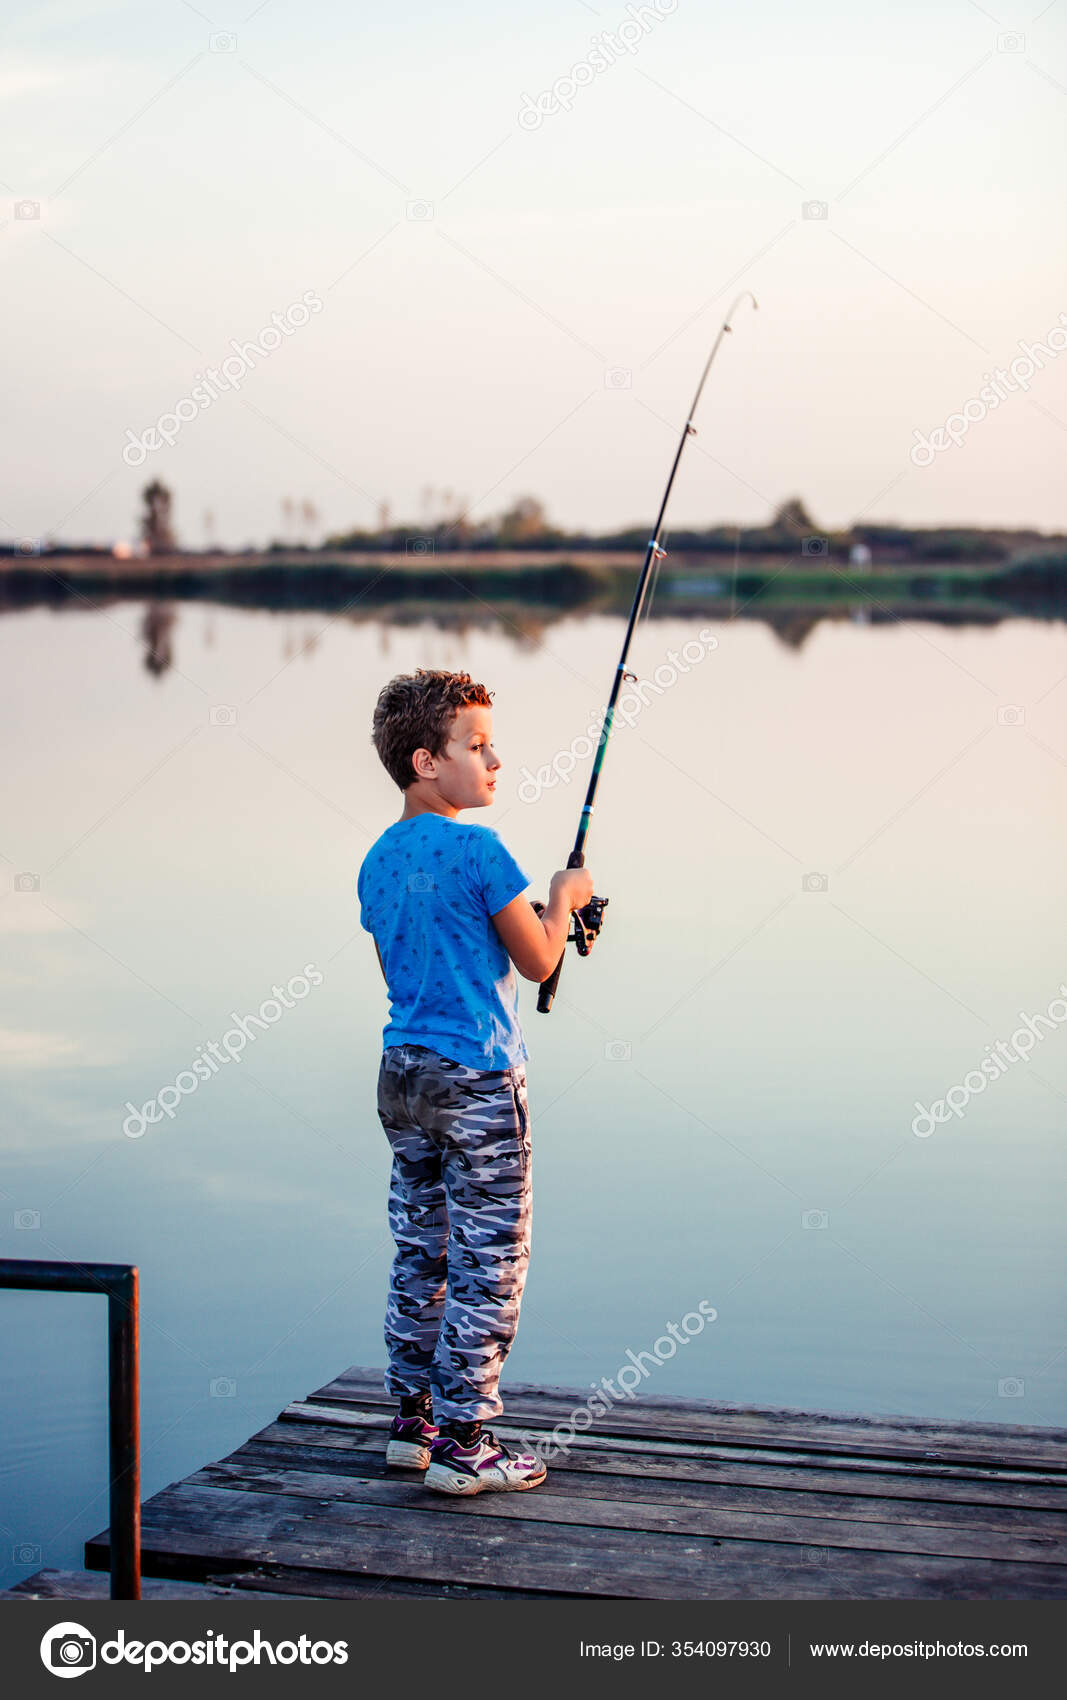 https://st3.depositphotos.com/19748242/35409/i/1600/depositphotos_354097930-stock-photo-little-happy-boy-fishing-rod.jpg